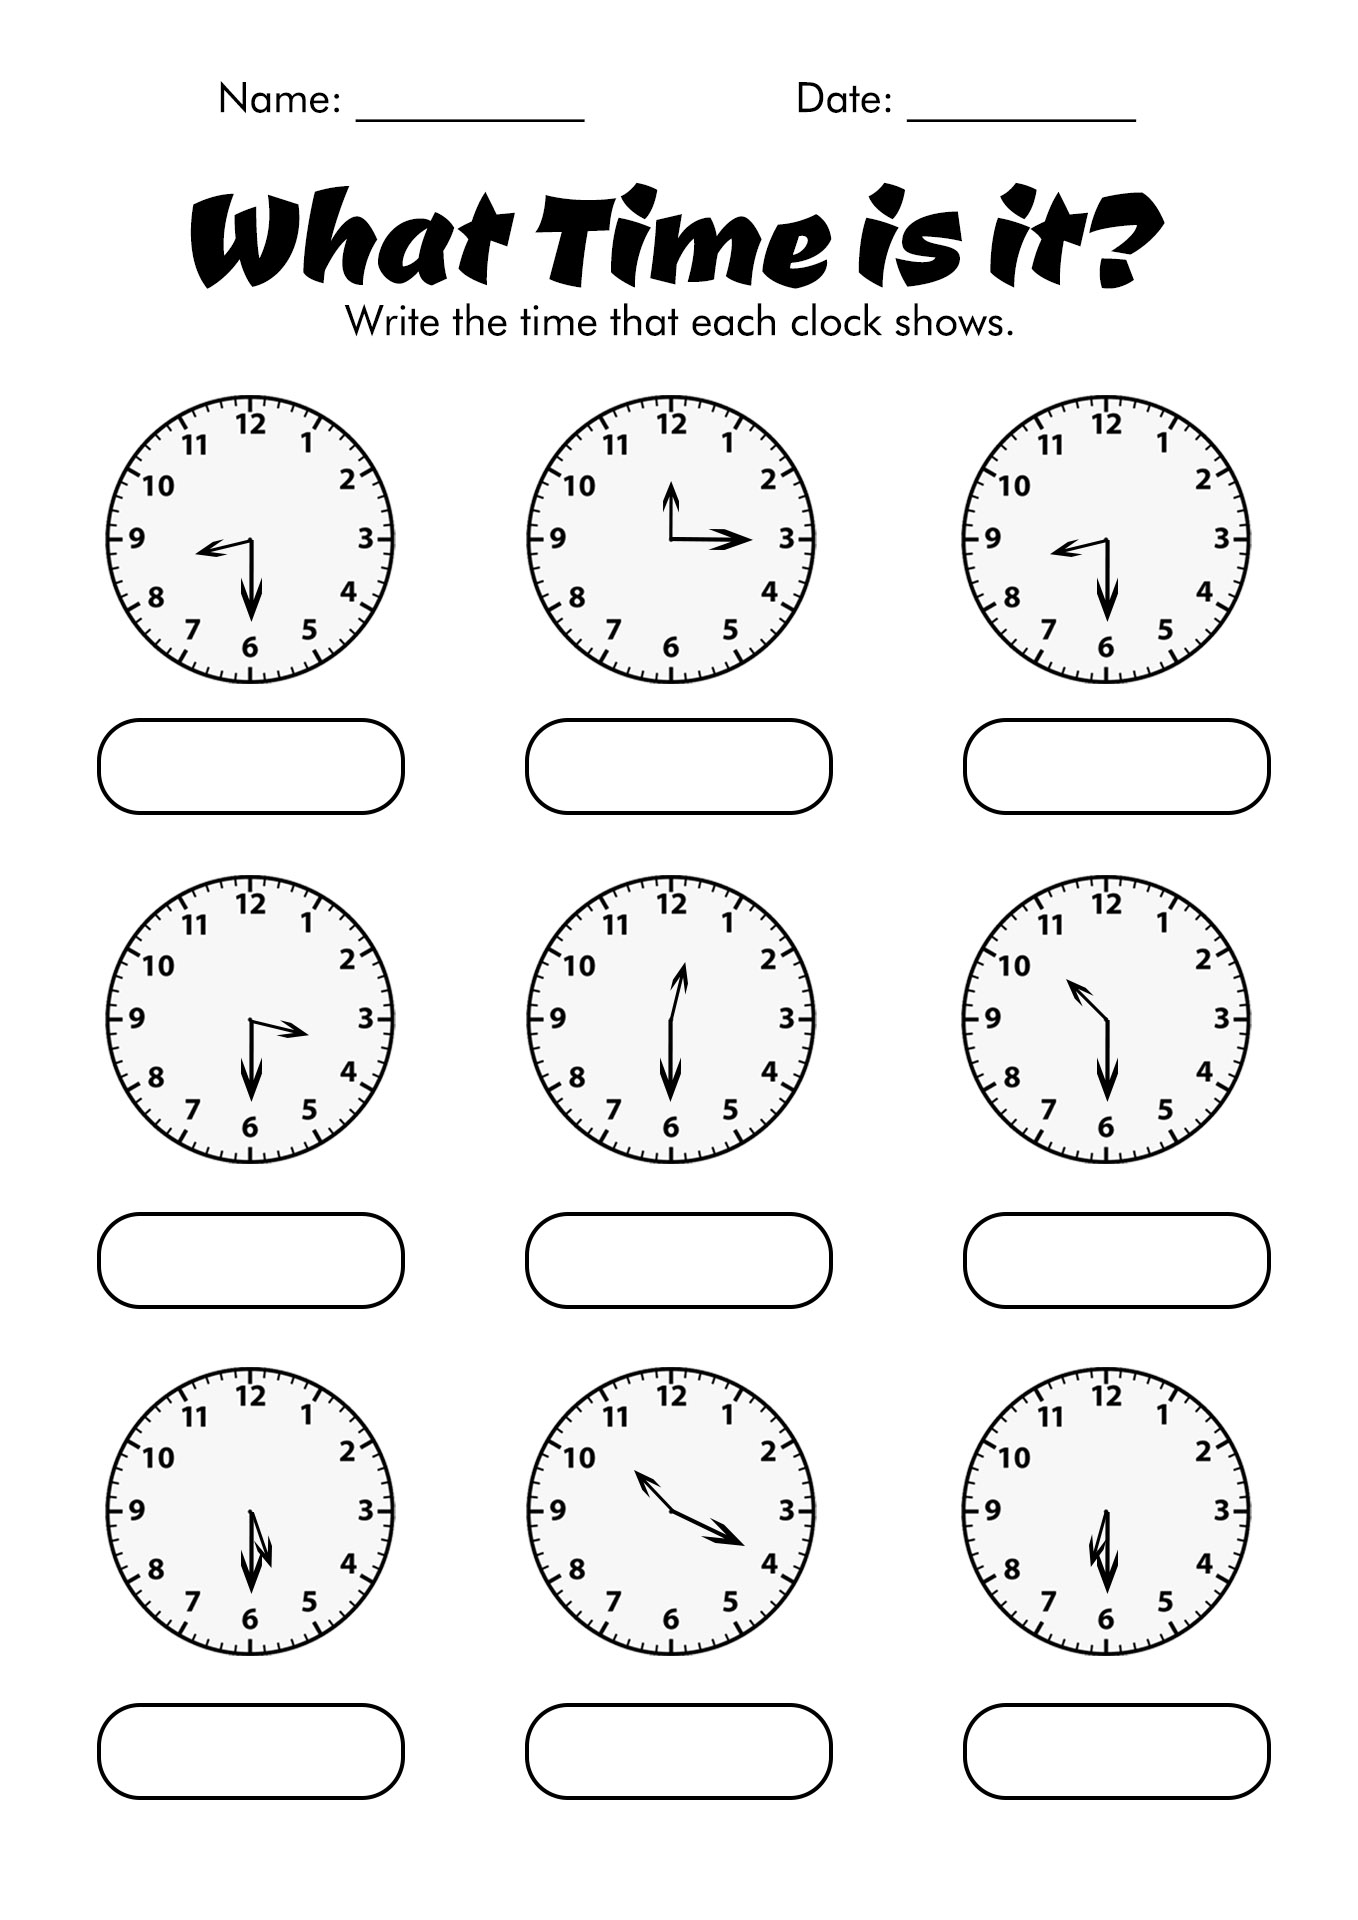 reading-clocks-worksheet-free-worksheets-library-worksheets-samples